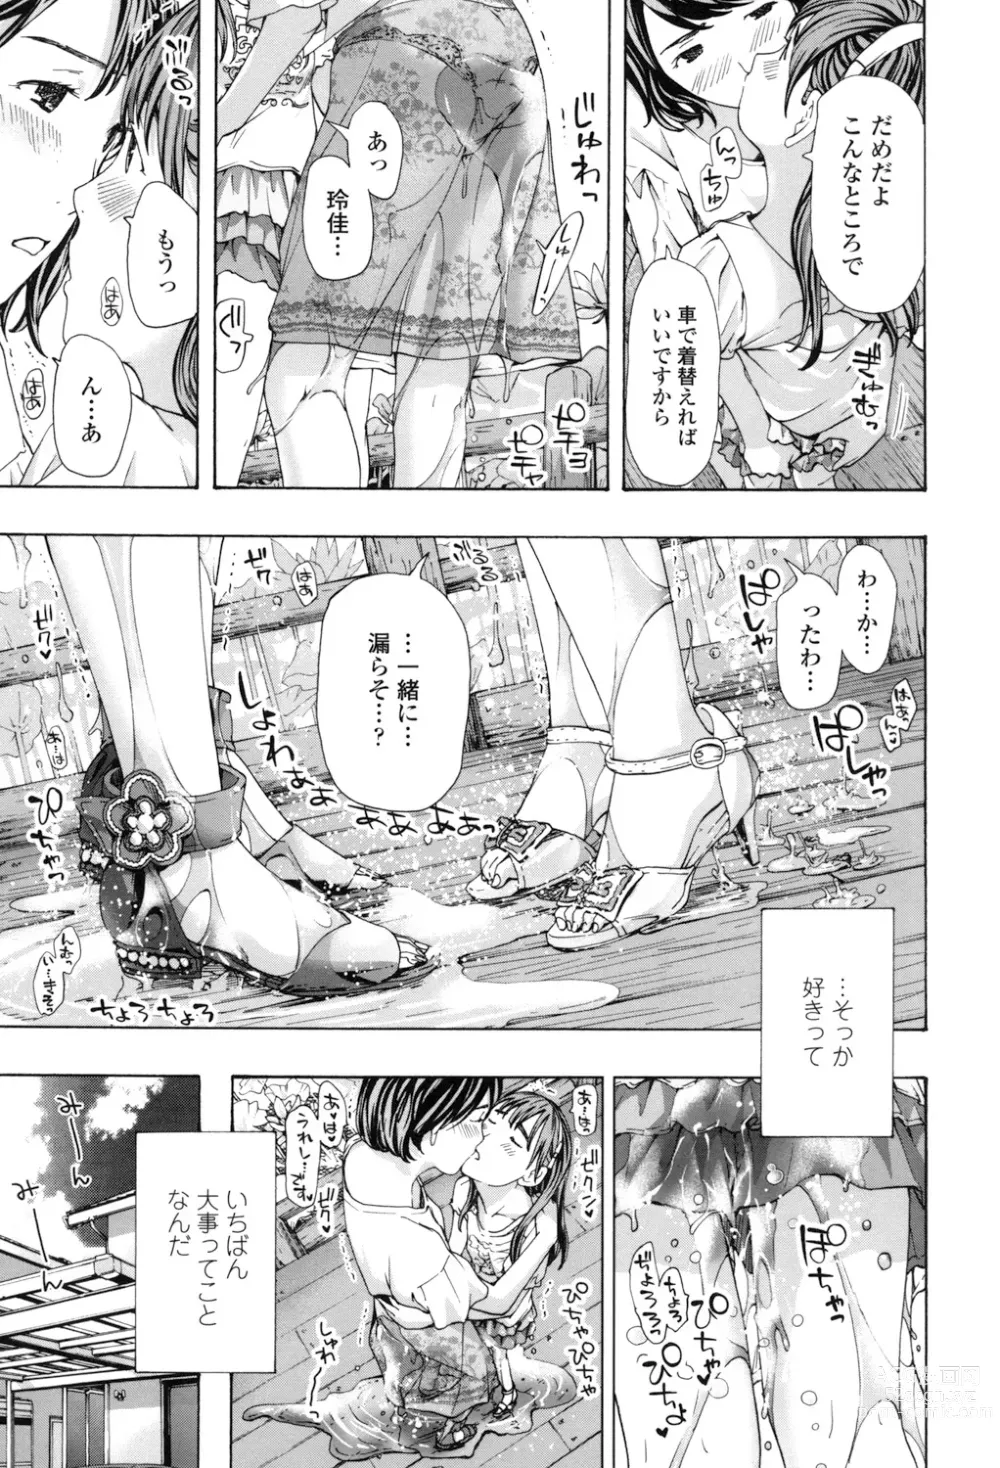 Page 189 of manga Girls Girls